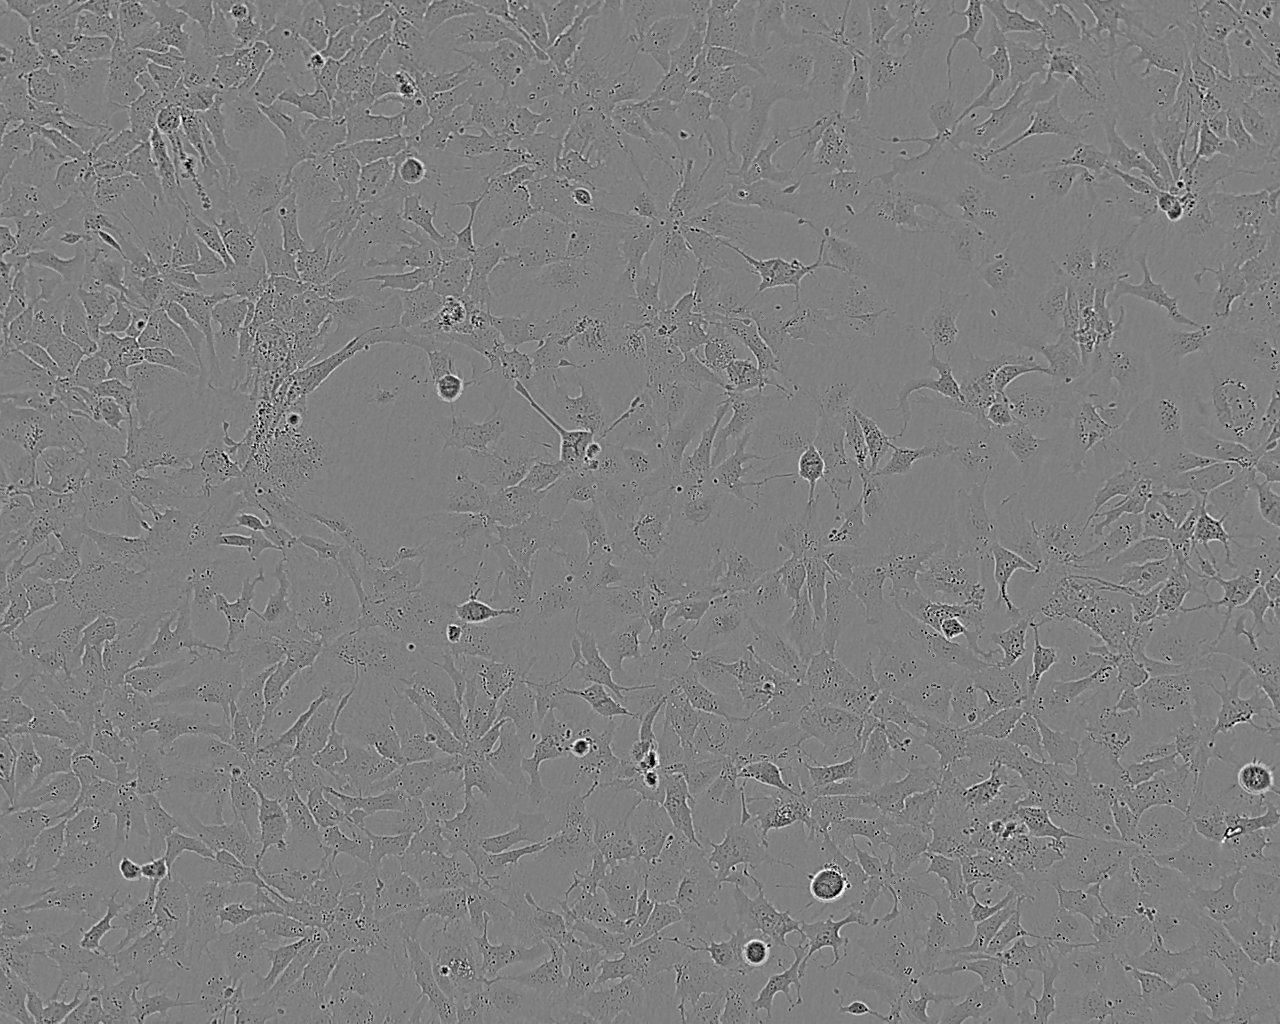 NCI-H1105 Cell|人小细胞肺癌细胞,NCI-H1105 Cell